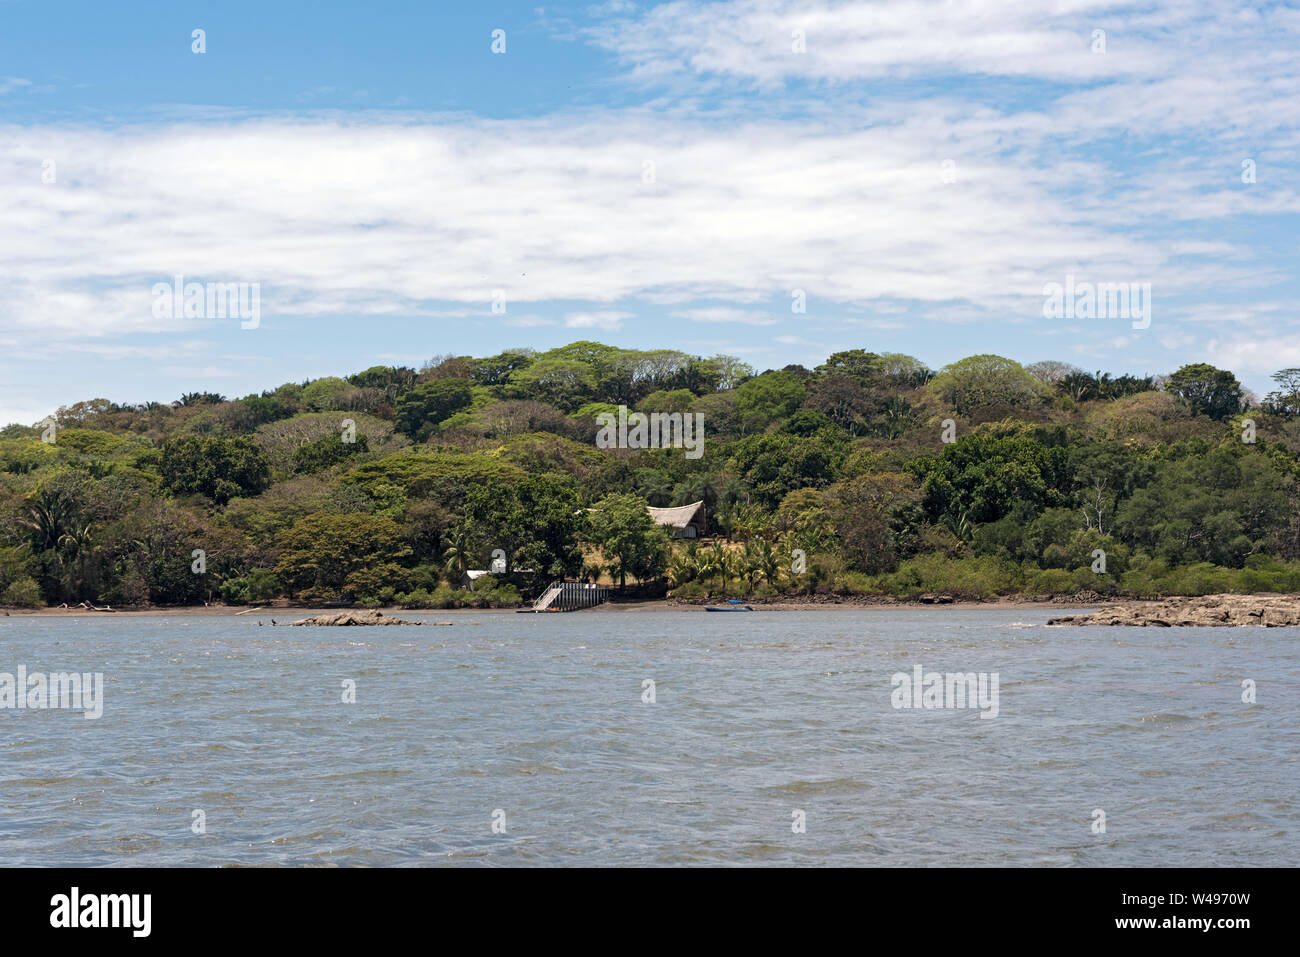 Islands in the Bahia de los Muertos the estuary of the Rio Platanal Panama Stock Photo